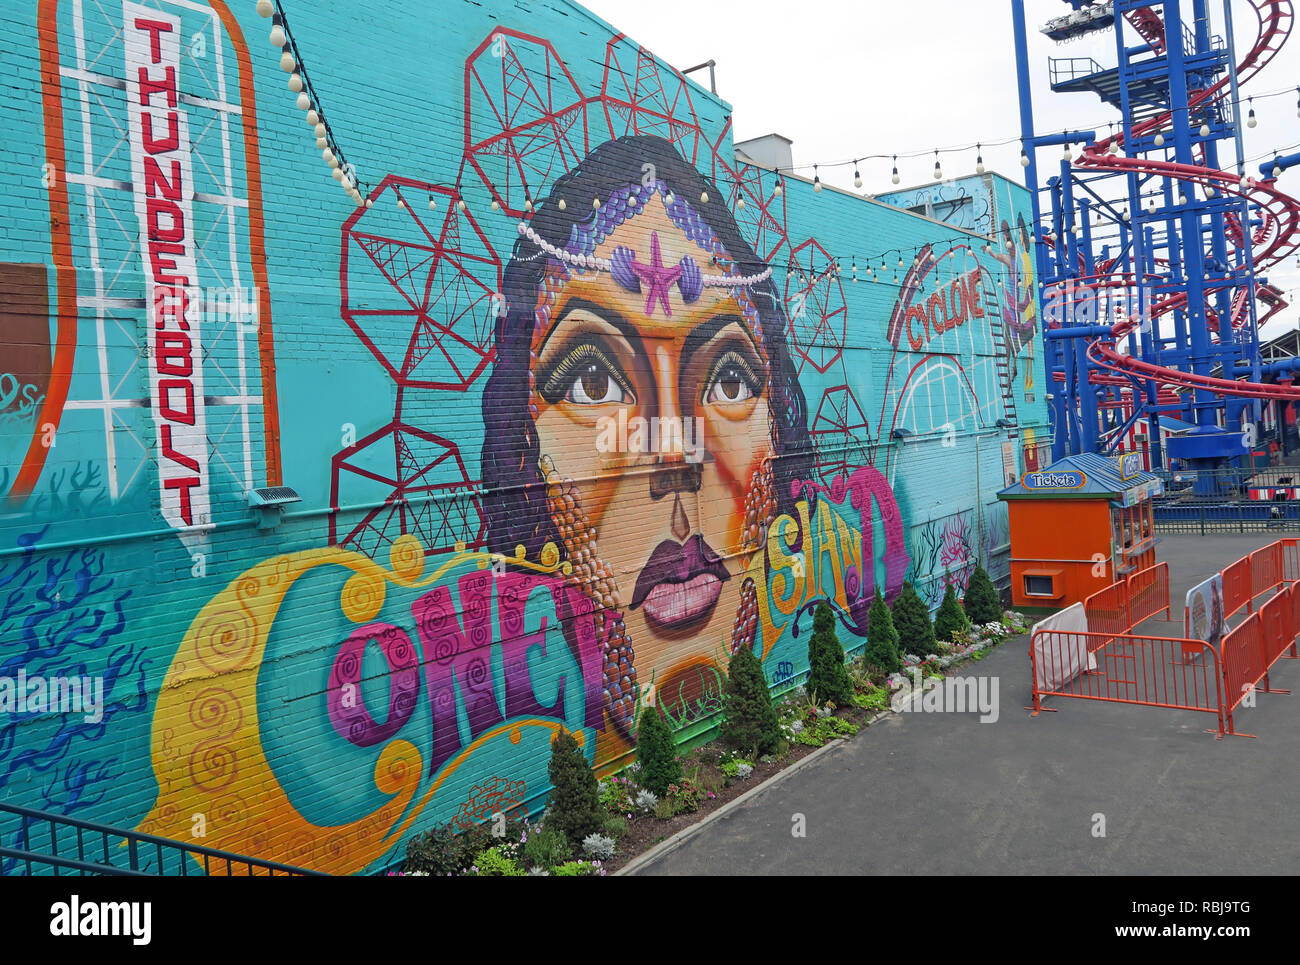 Coney Island femme peinture sur mur, Brooklyn, New York City, NY, USA Banque D'Images